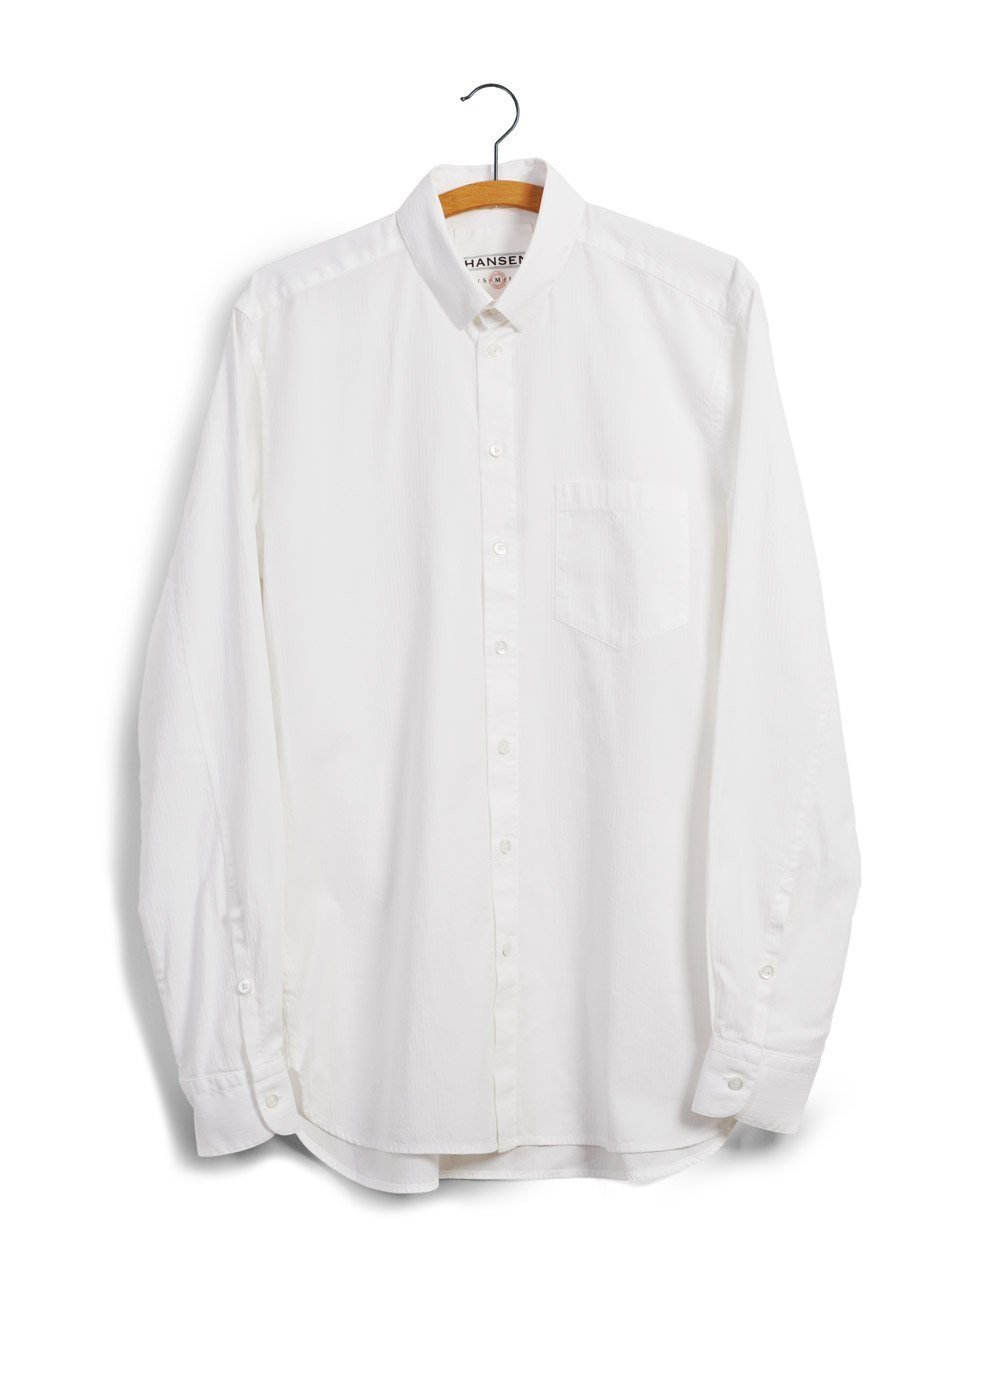 HAAKON | Hidden Button Down Shirt | White -HANSEN Garments- HANSEN Garments